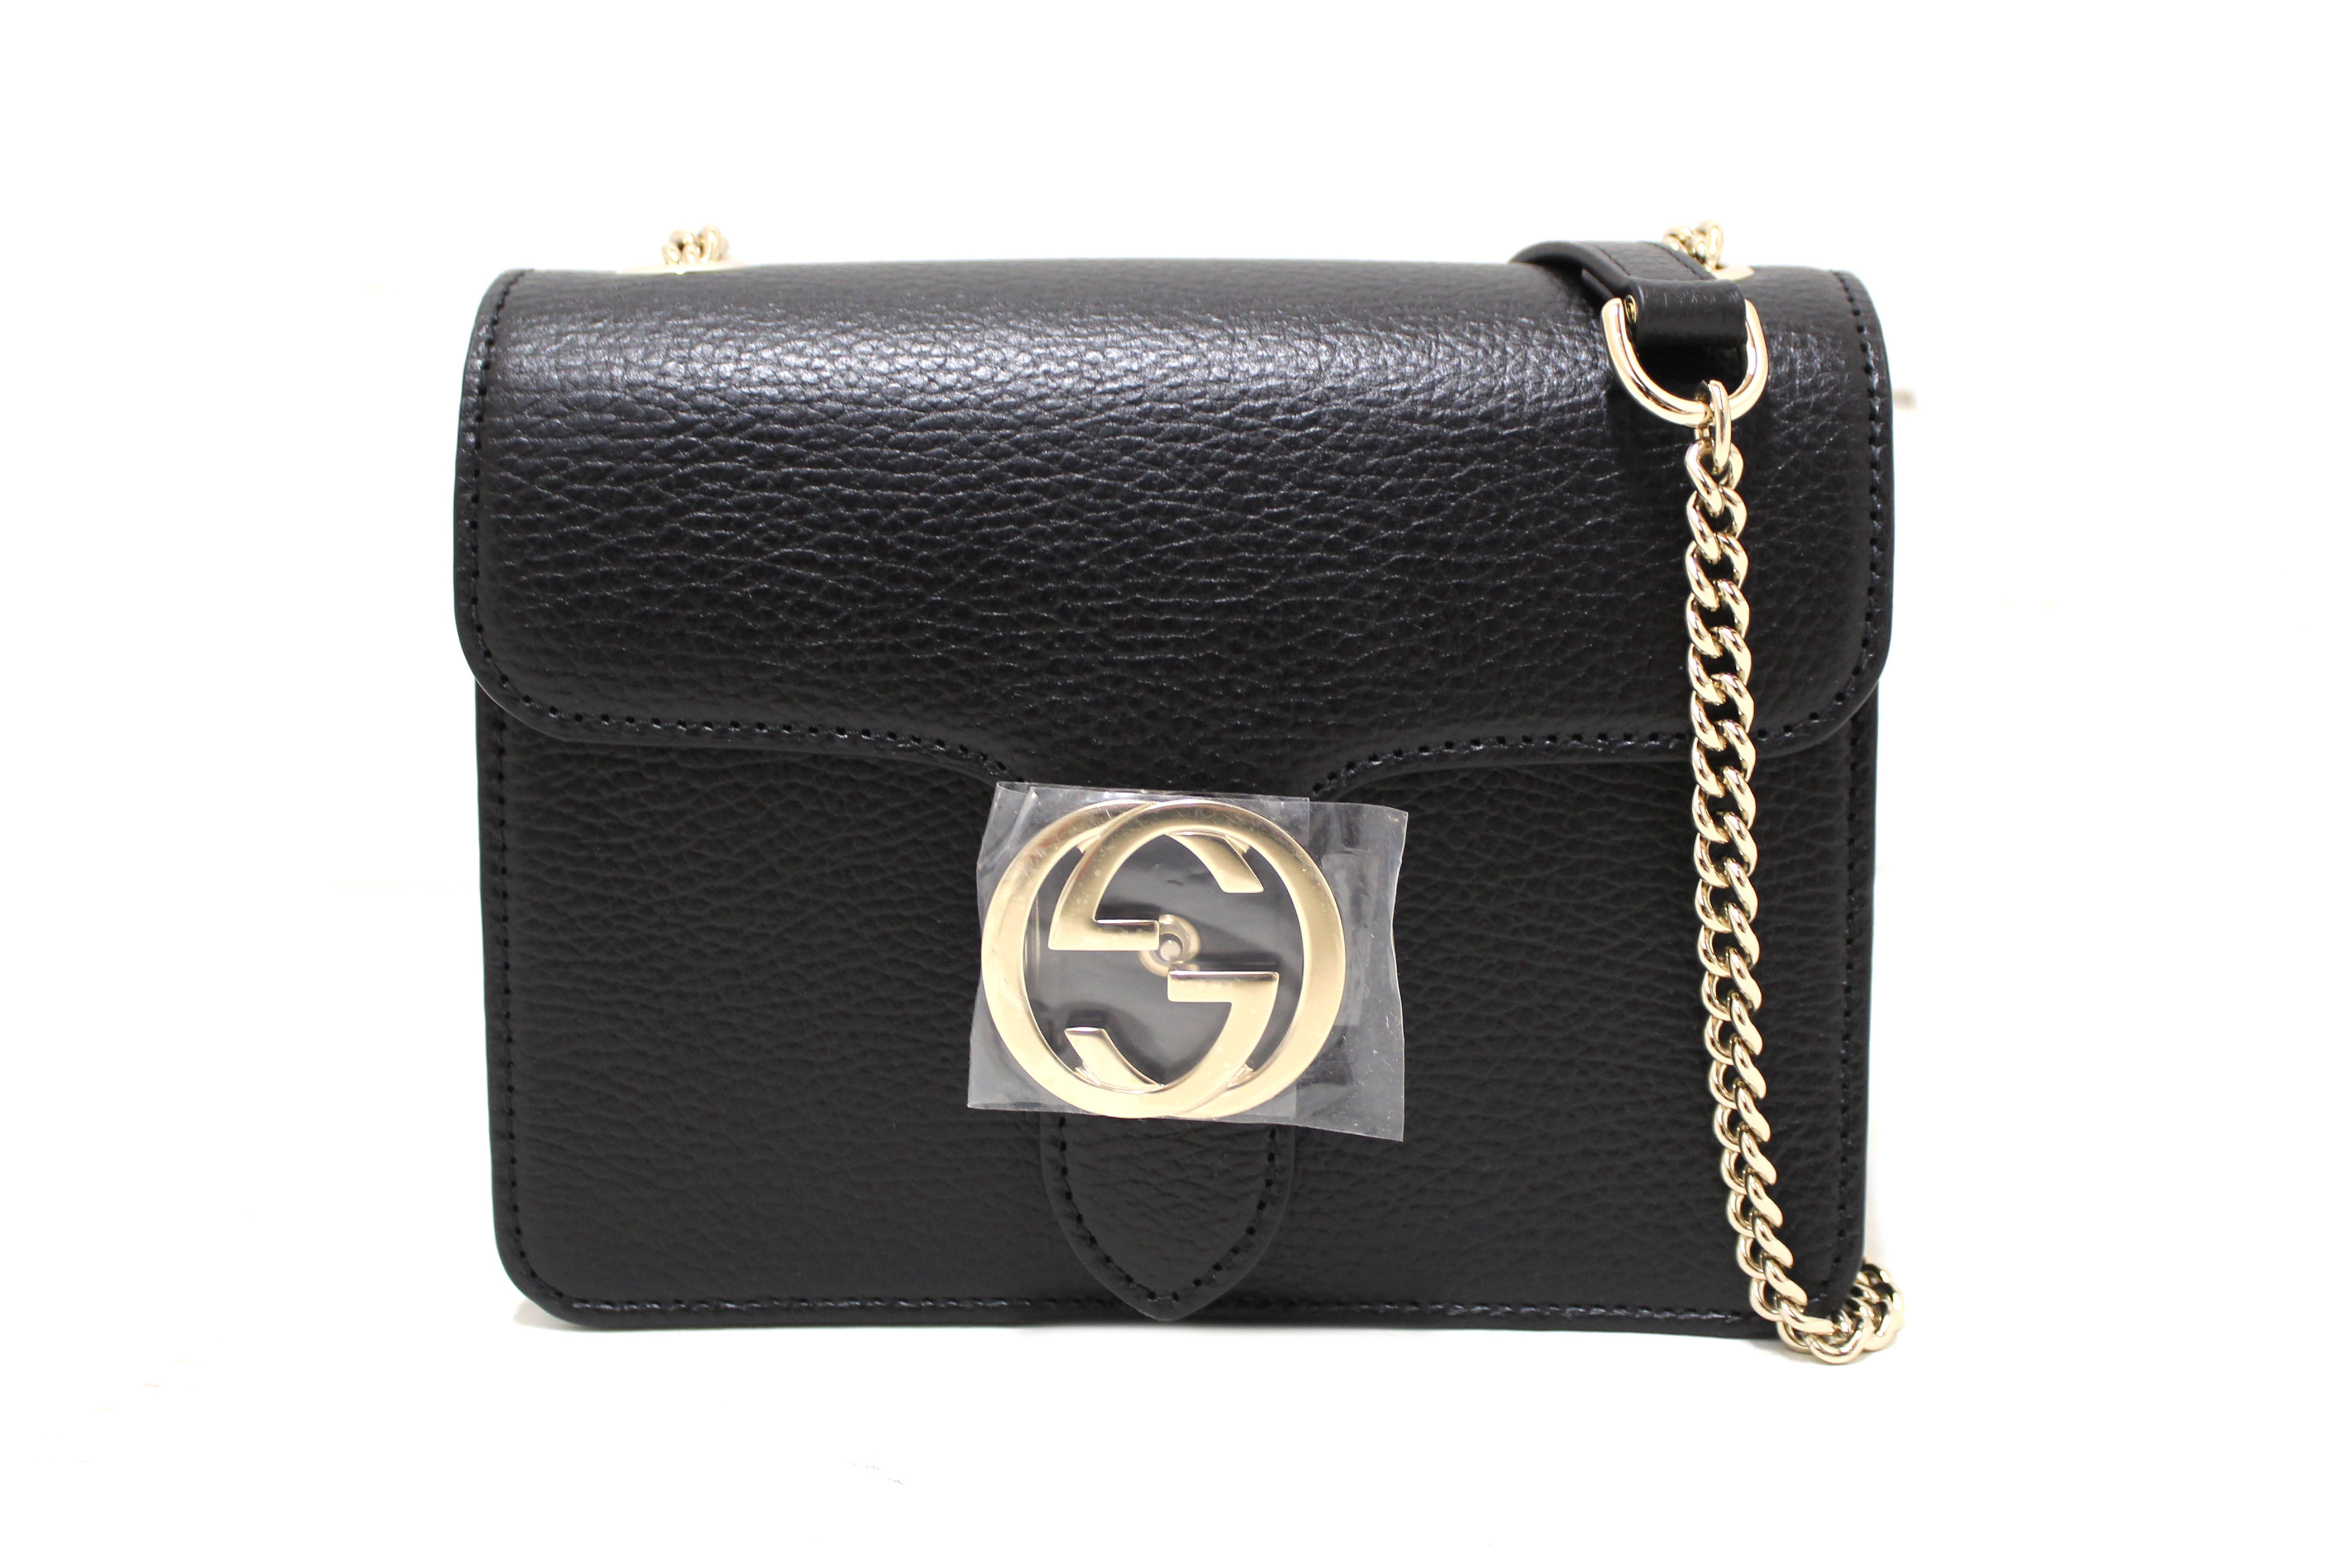 Where can I buy replicas of Gucci handbags? - Quora